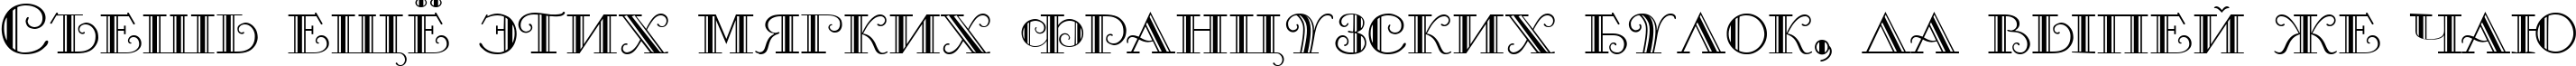 Пример написания шрифтом Monte-Carlo текста на русском